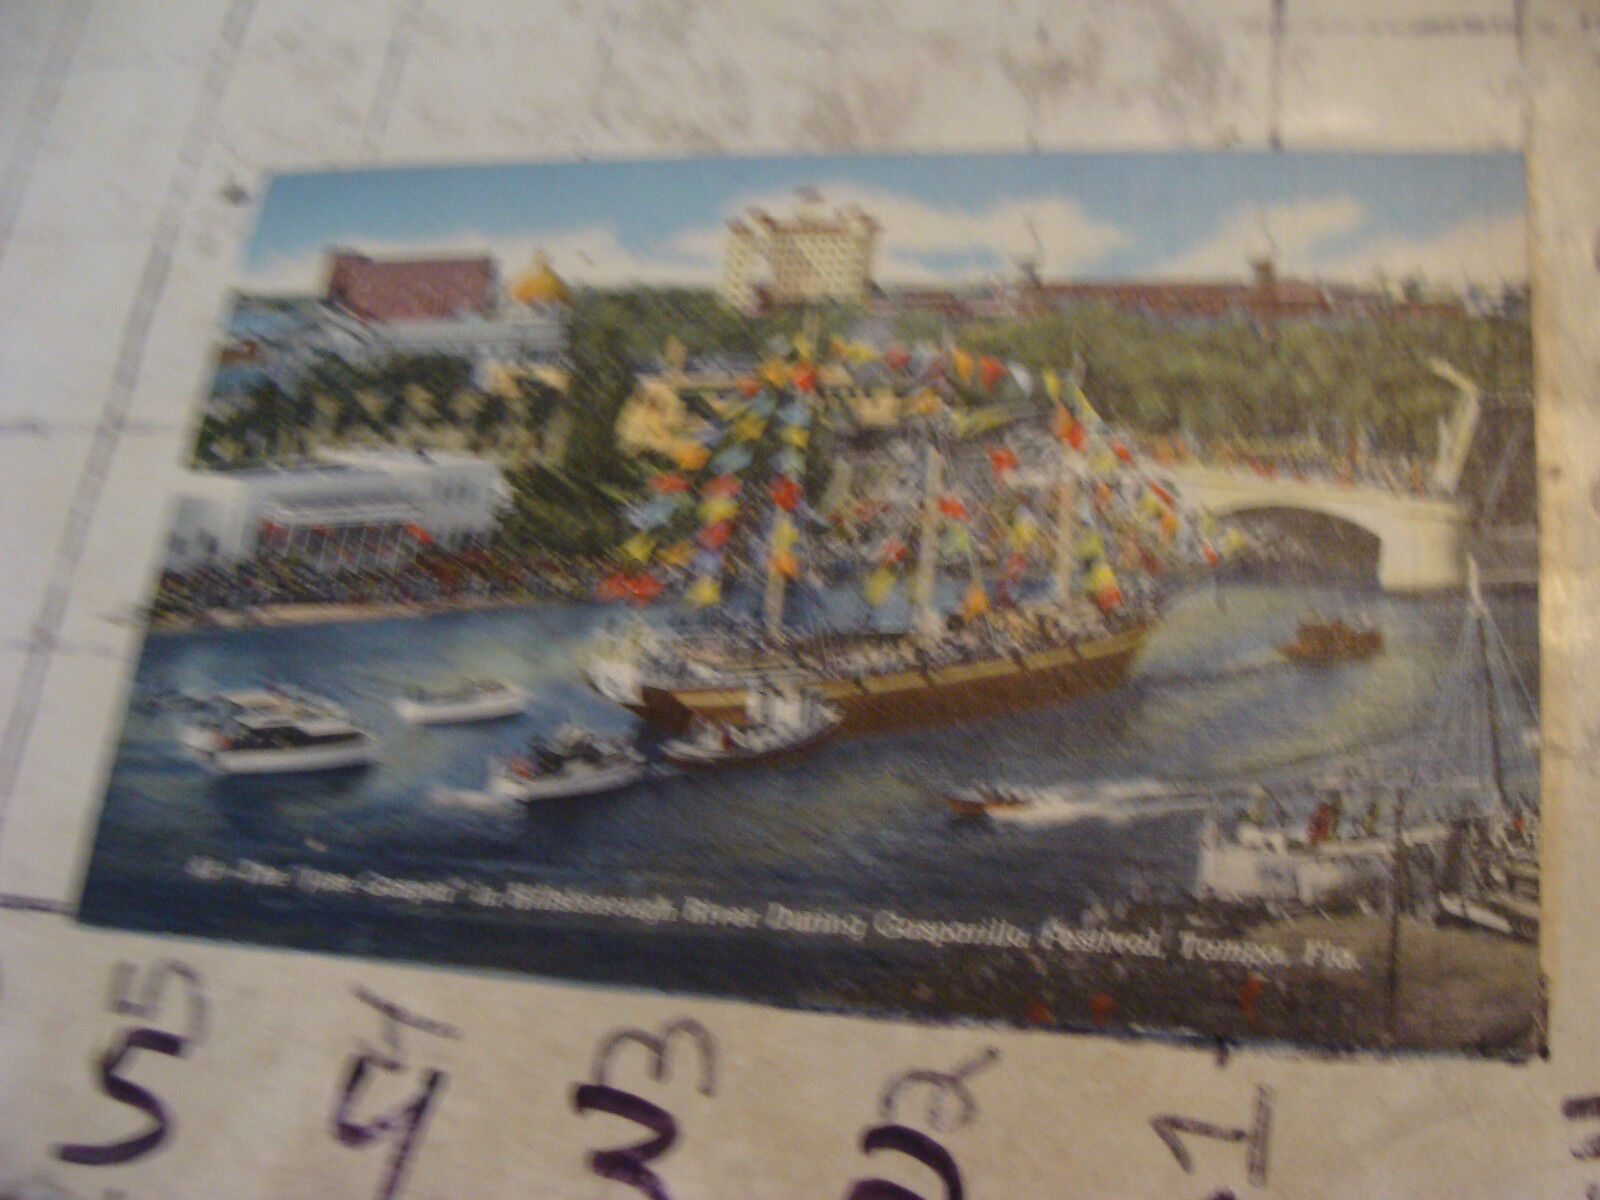 Orig Vint post card 1940 JOSE GASPER HILLSBOROUGH RIVER GASPARILLA TAMPA FLORIDA